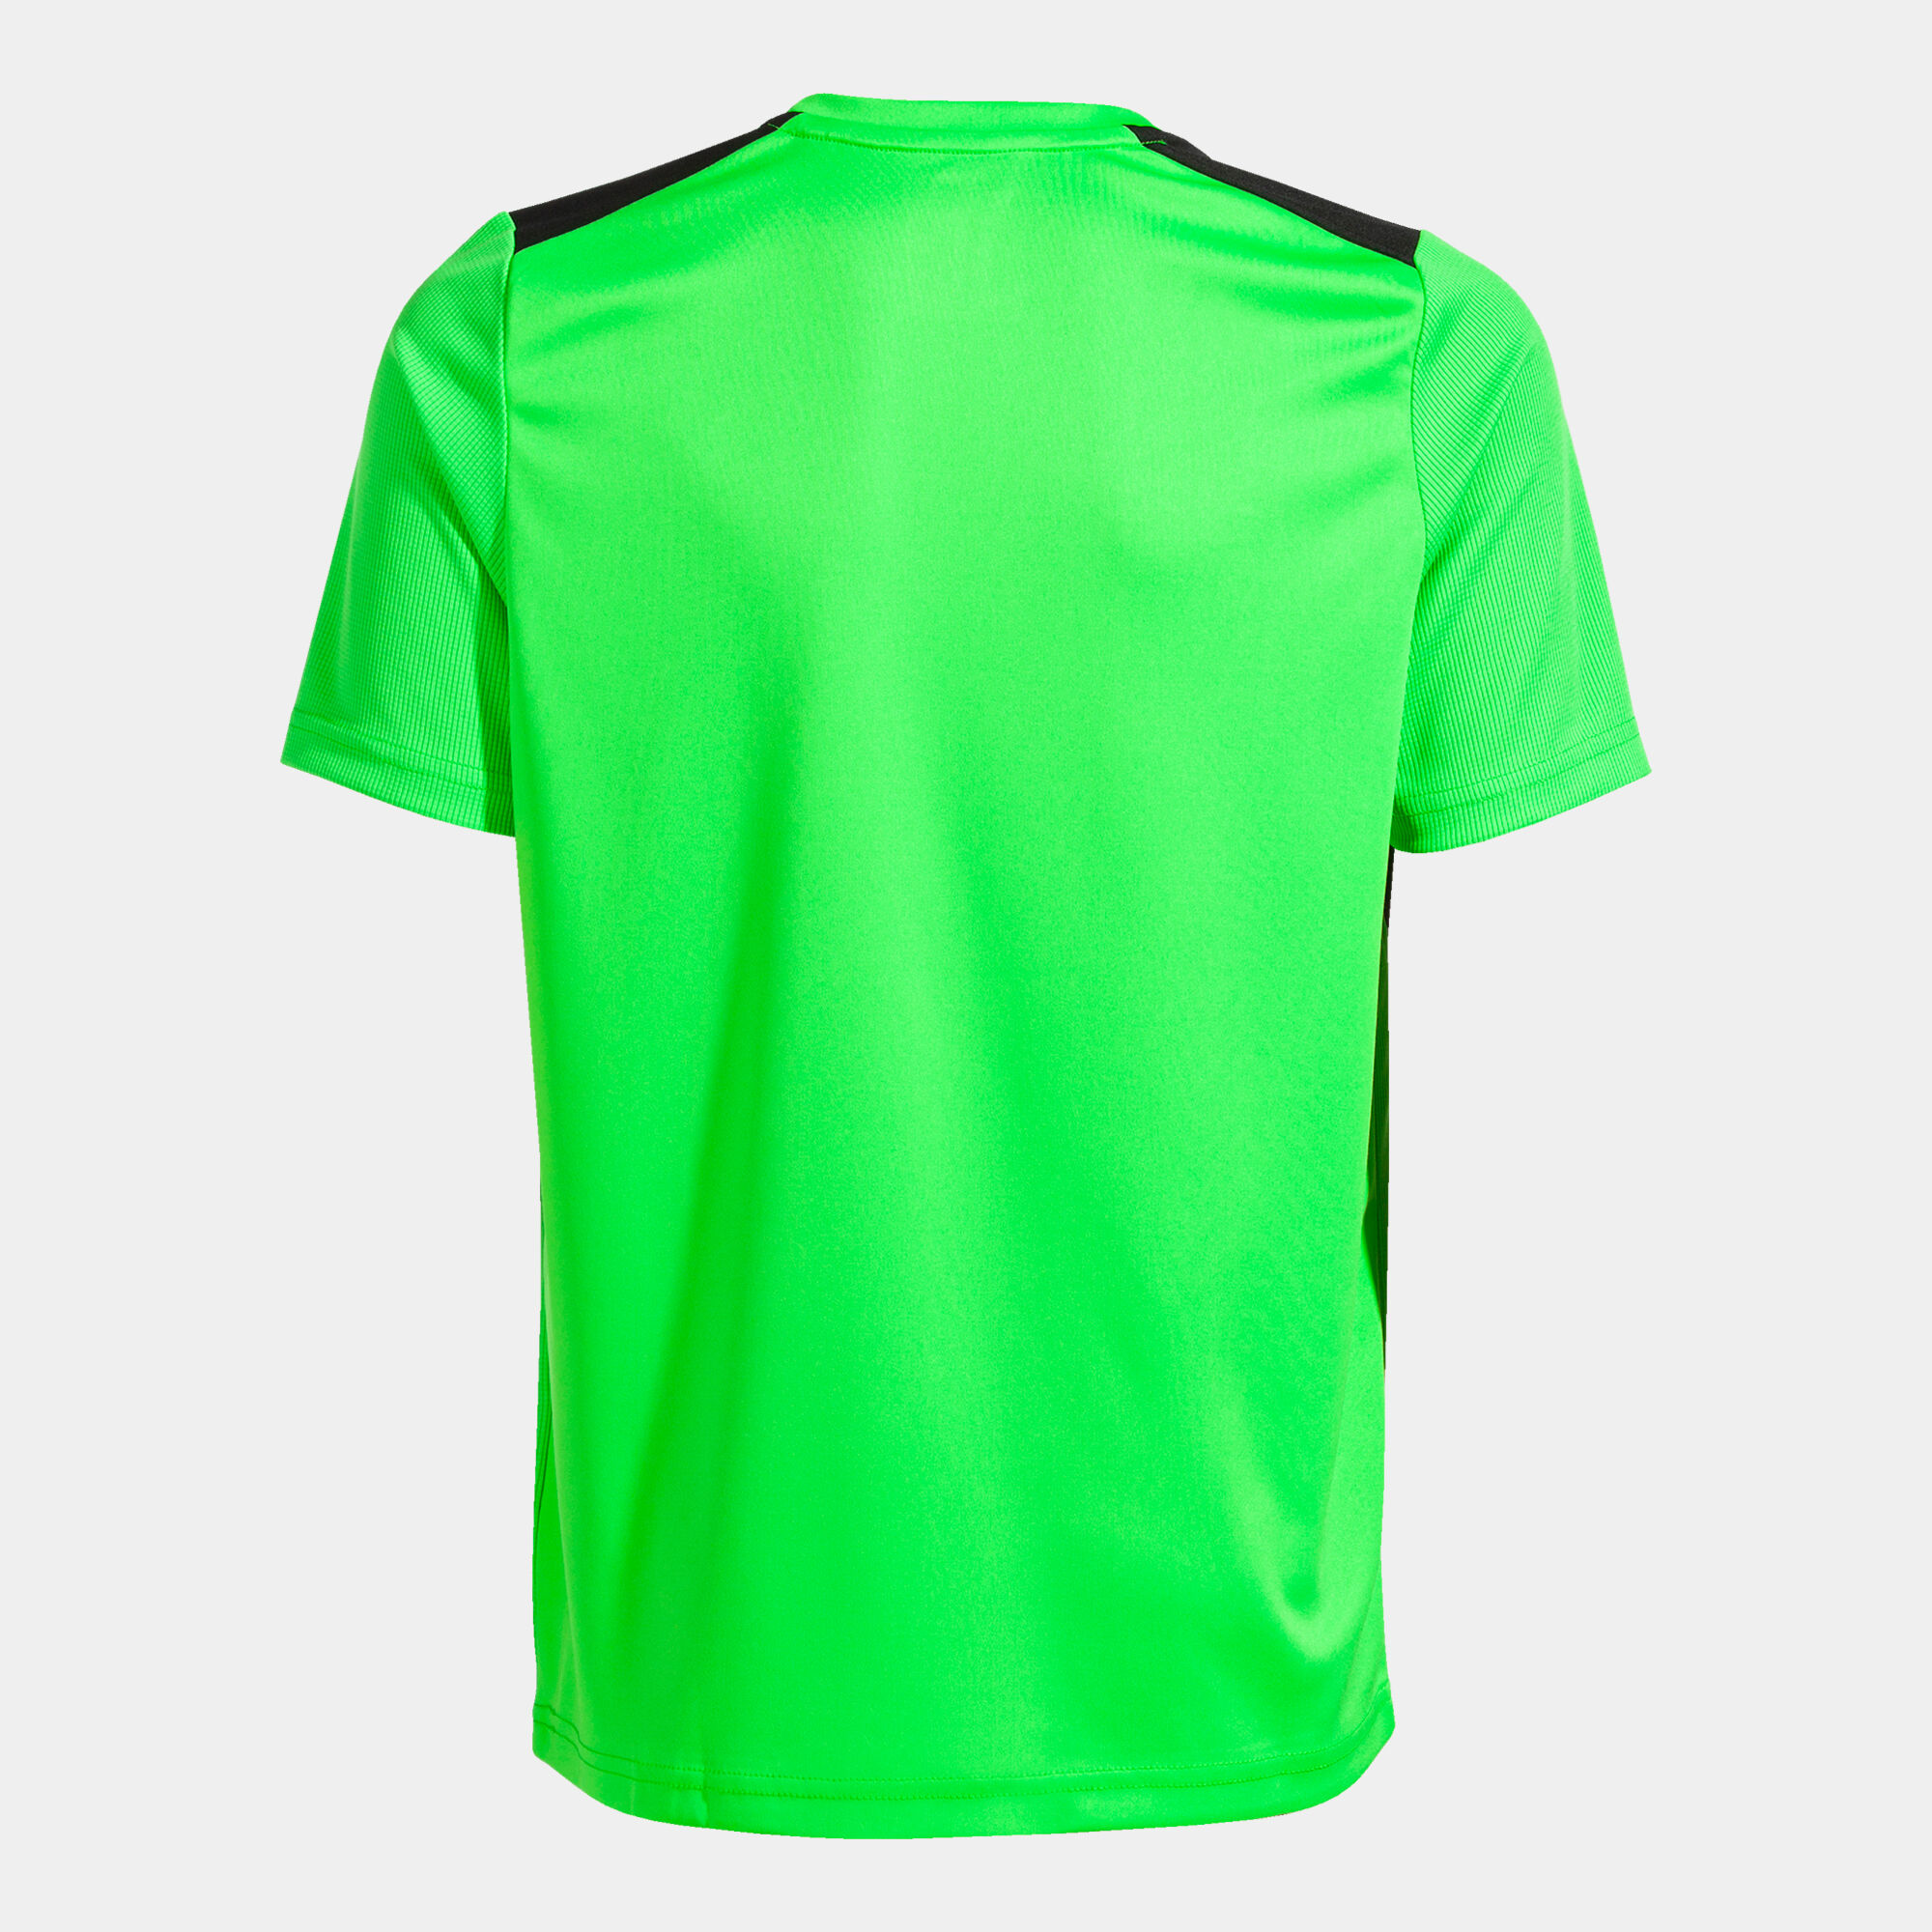 Camiseta manga corta hombre Championship VII verde flúor negro